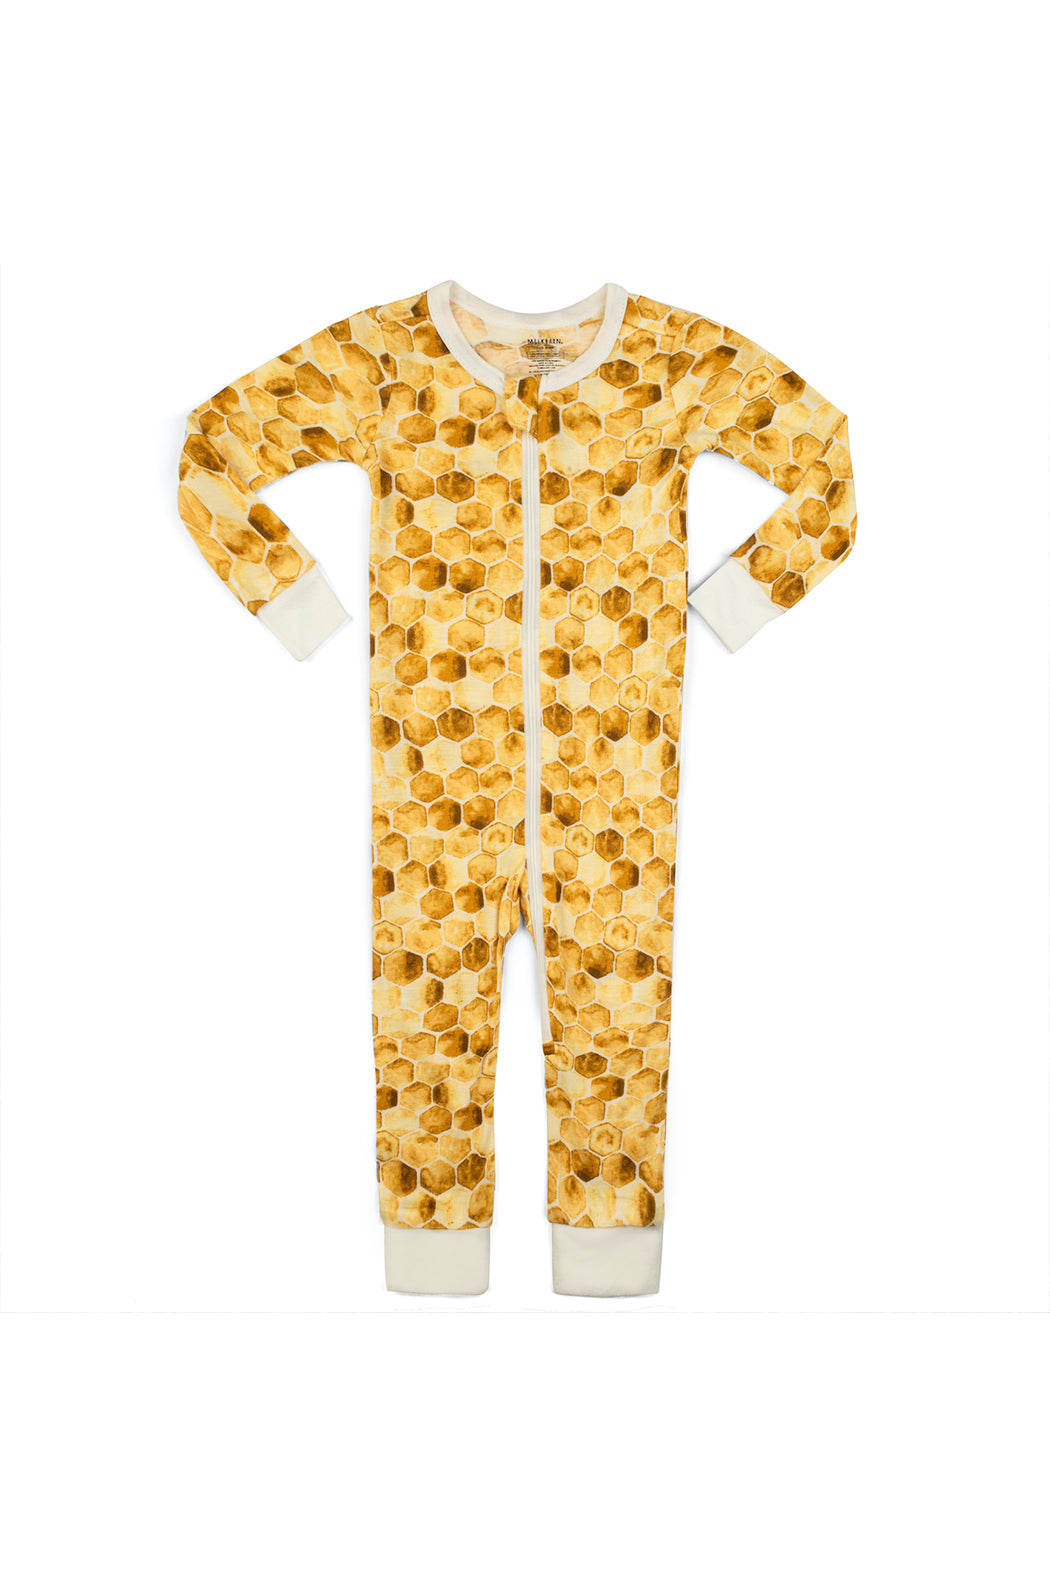 Milkbarn Bamboo Zipper Pajamas - Honeycomb